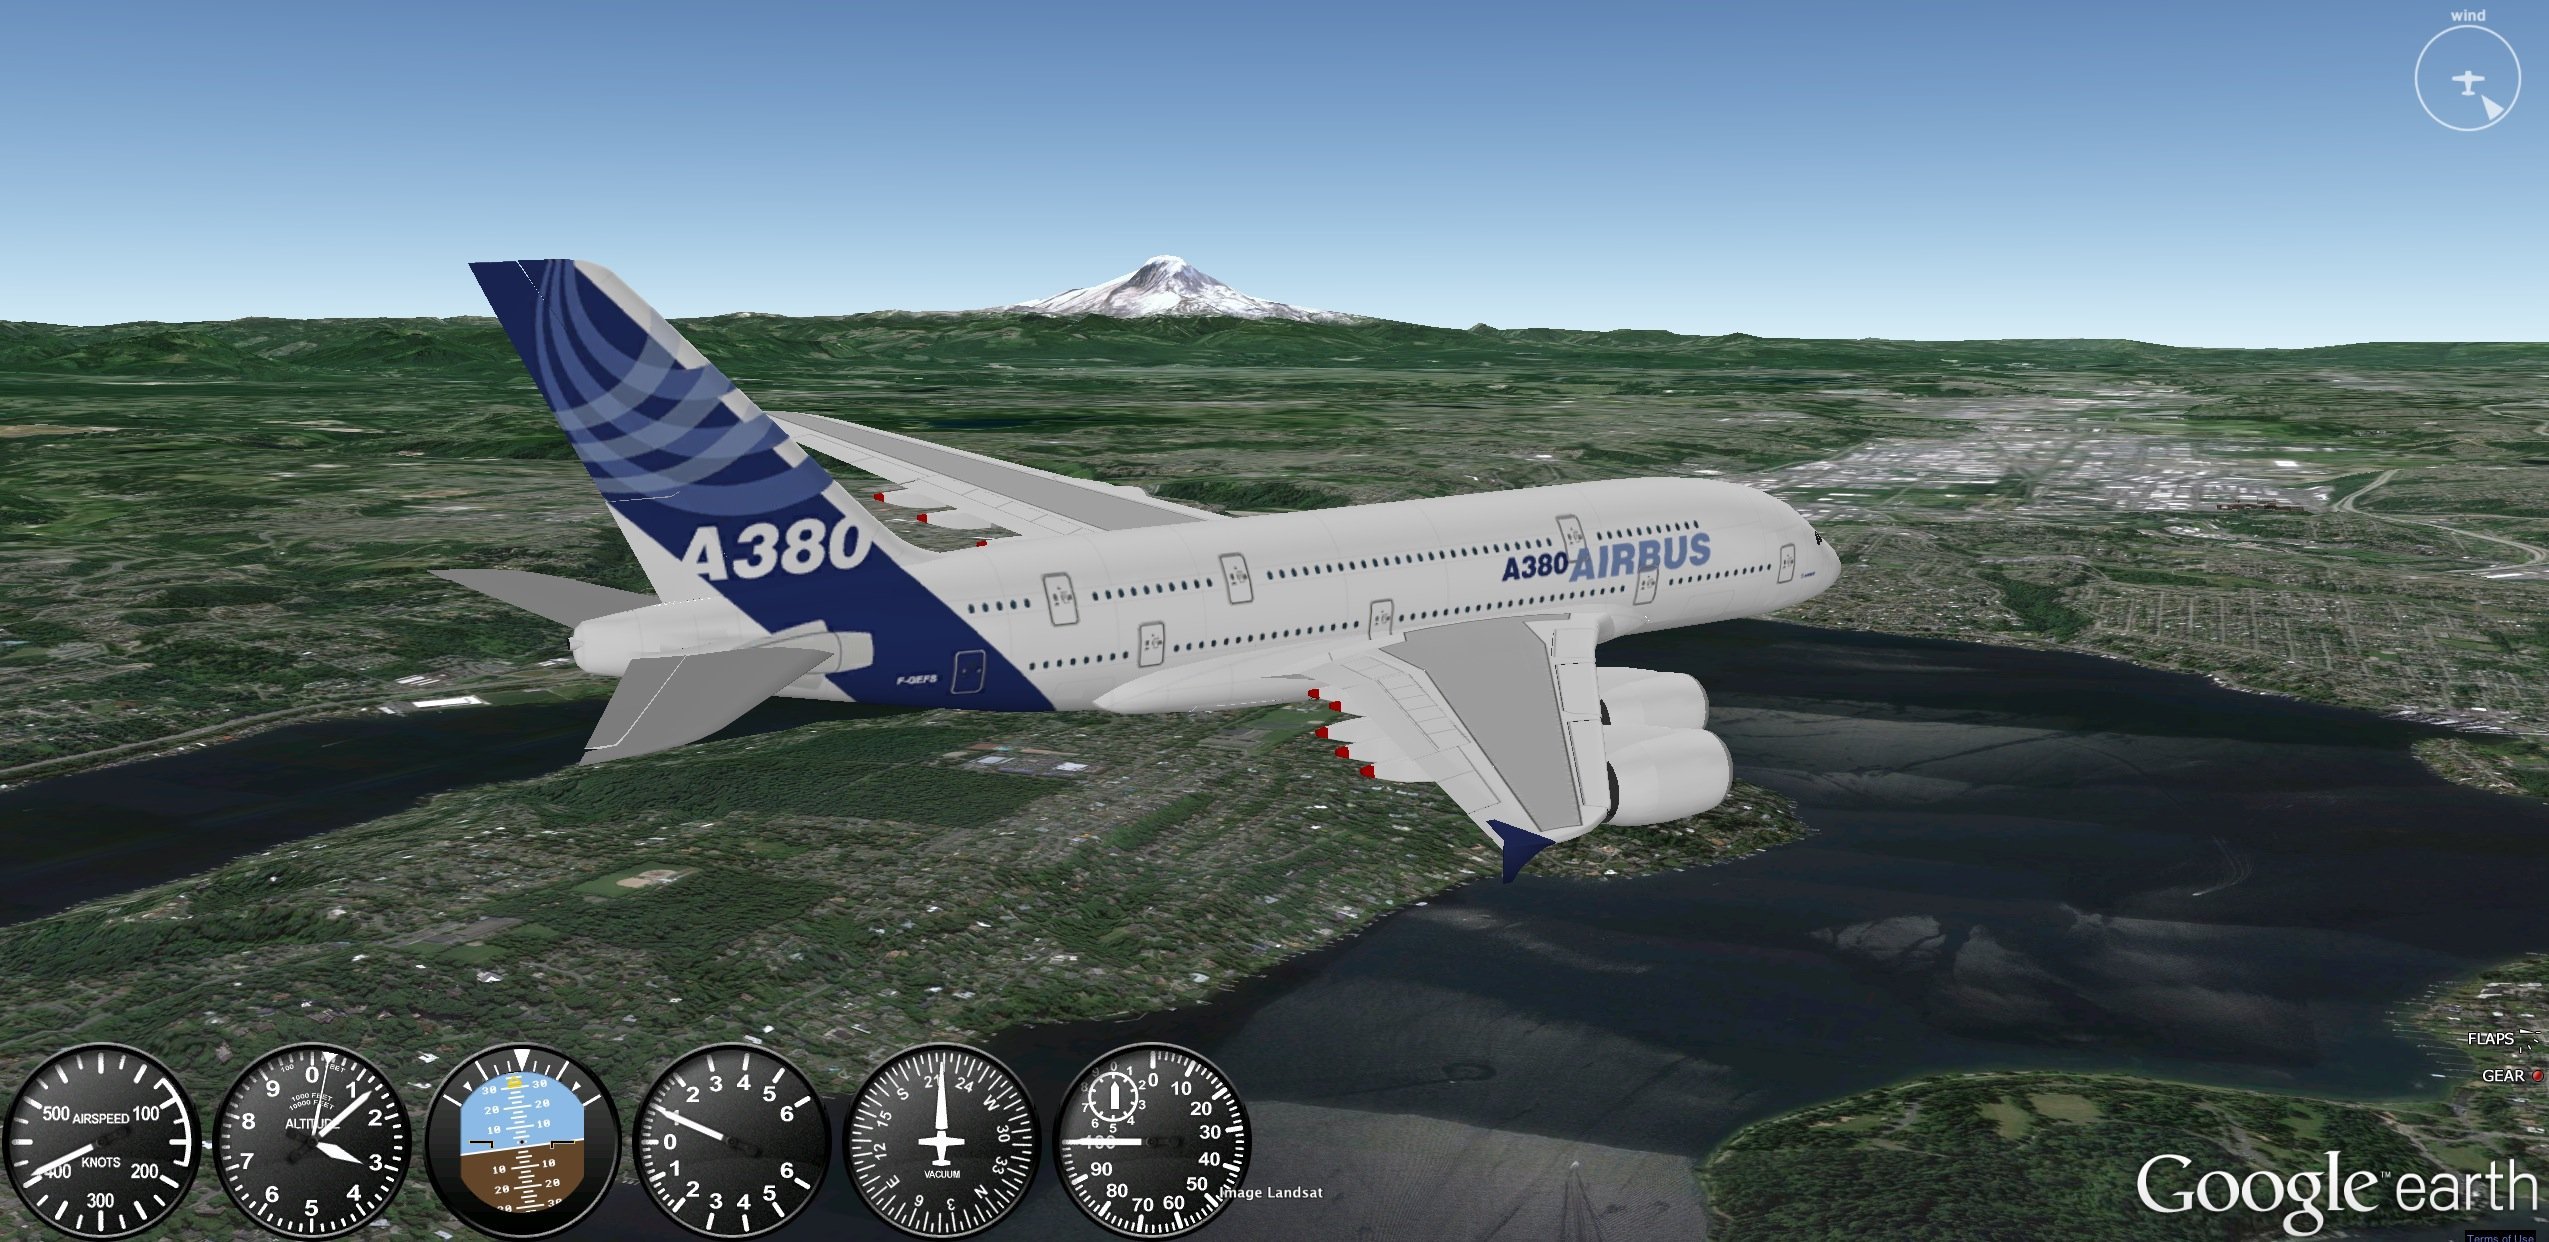 Airplane Flight Pilot Simulator for windows download free